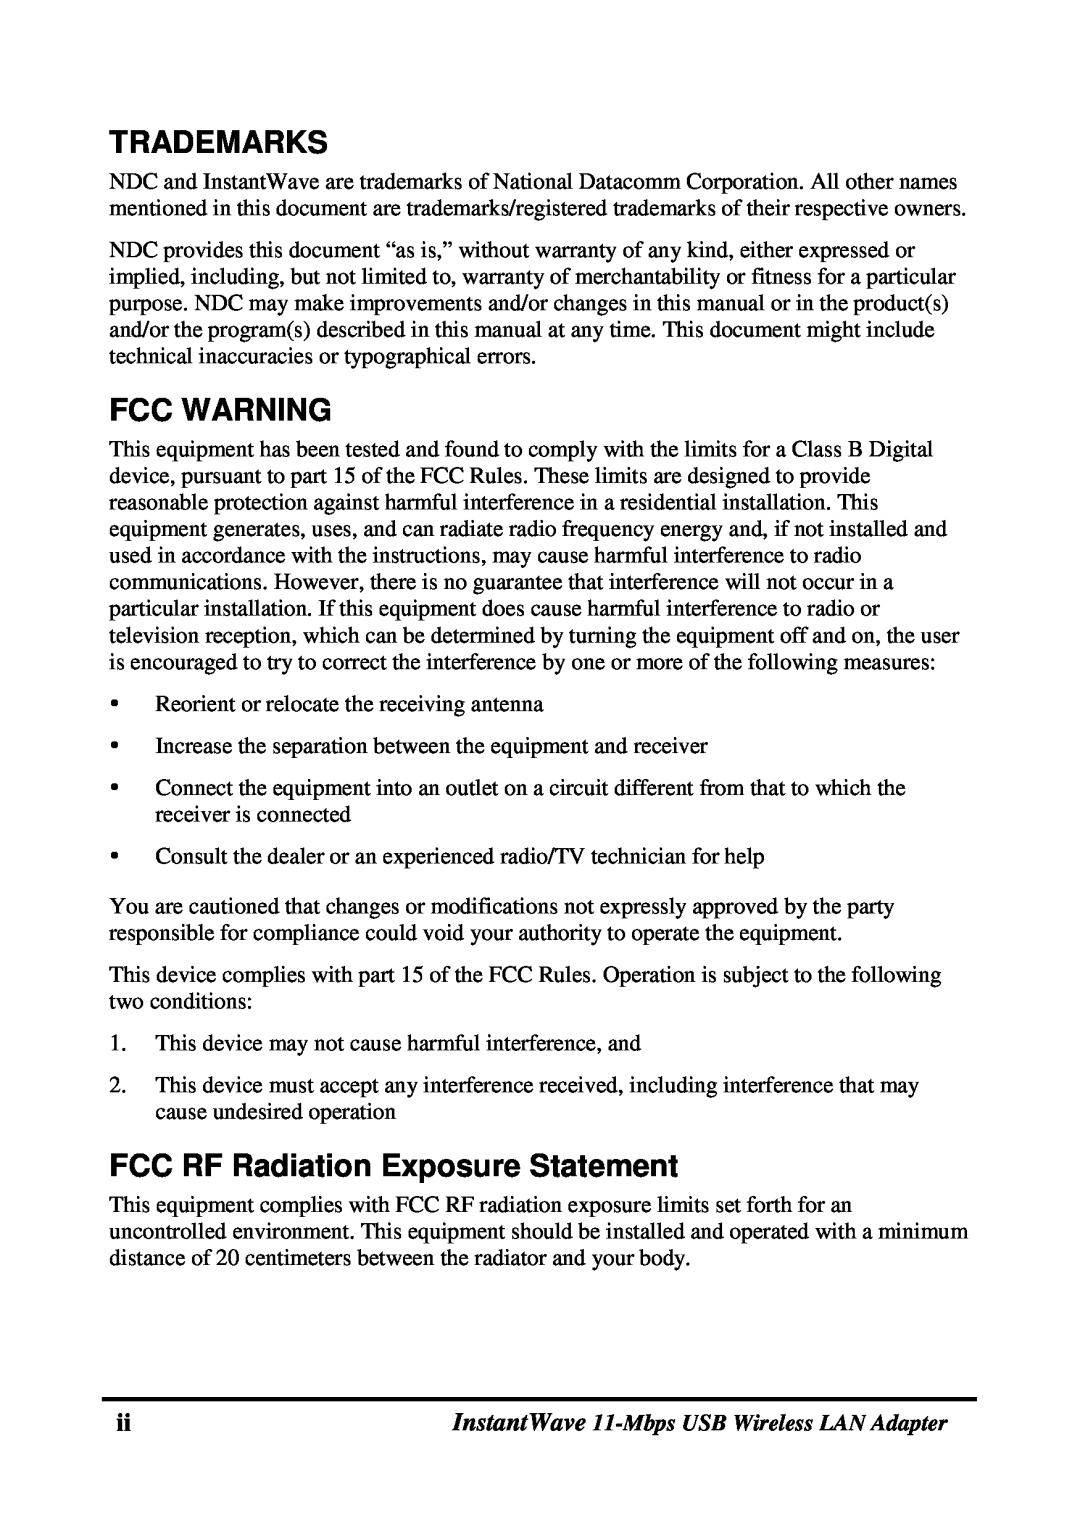 NDC comm NWH4020 manual Trademarks, Fcc Warning, FCC RF Radiation Exposure Statement 